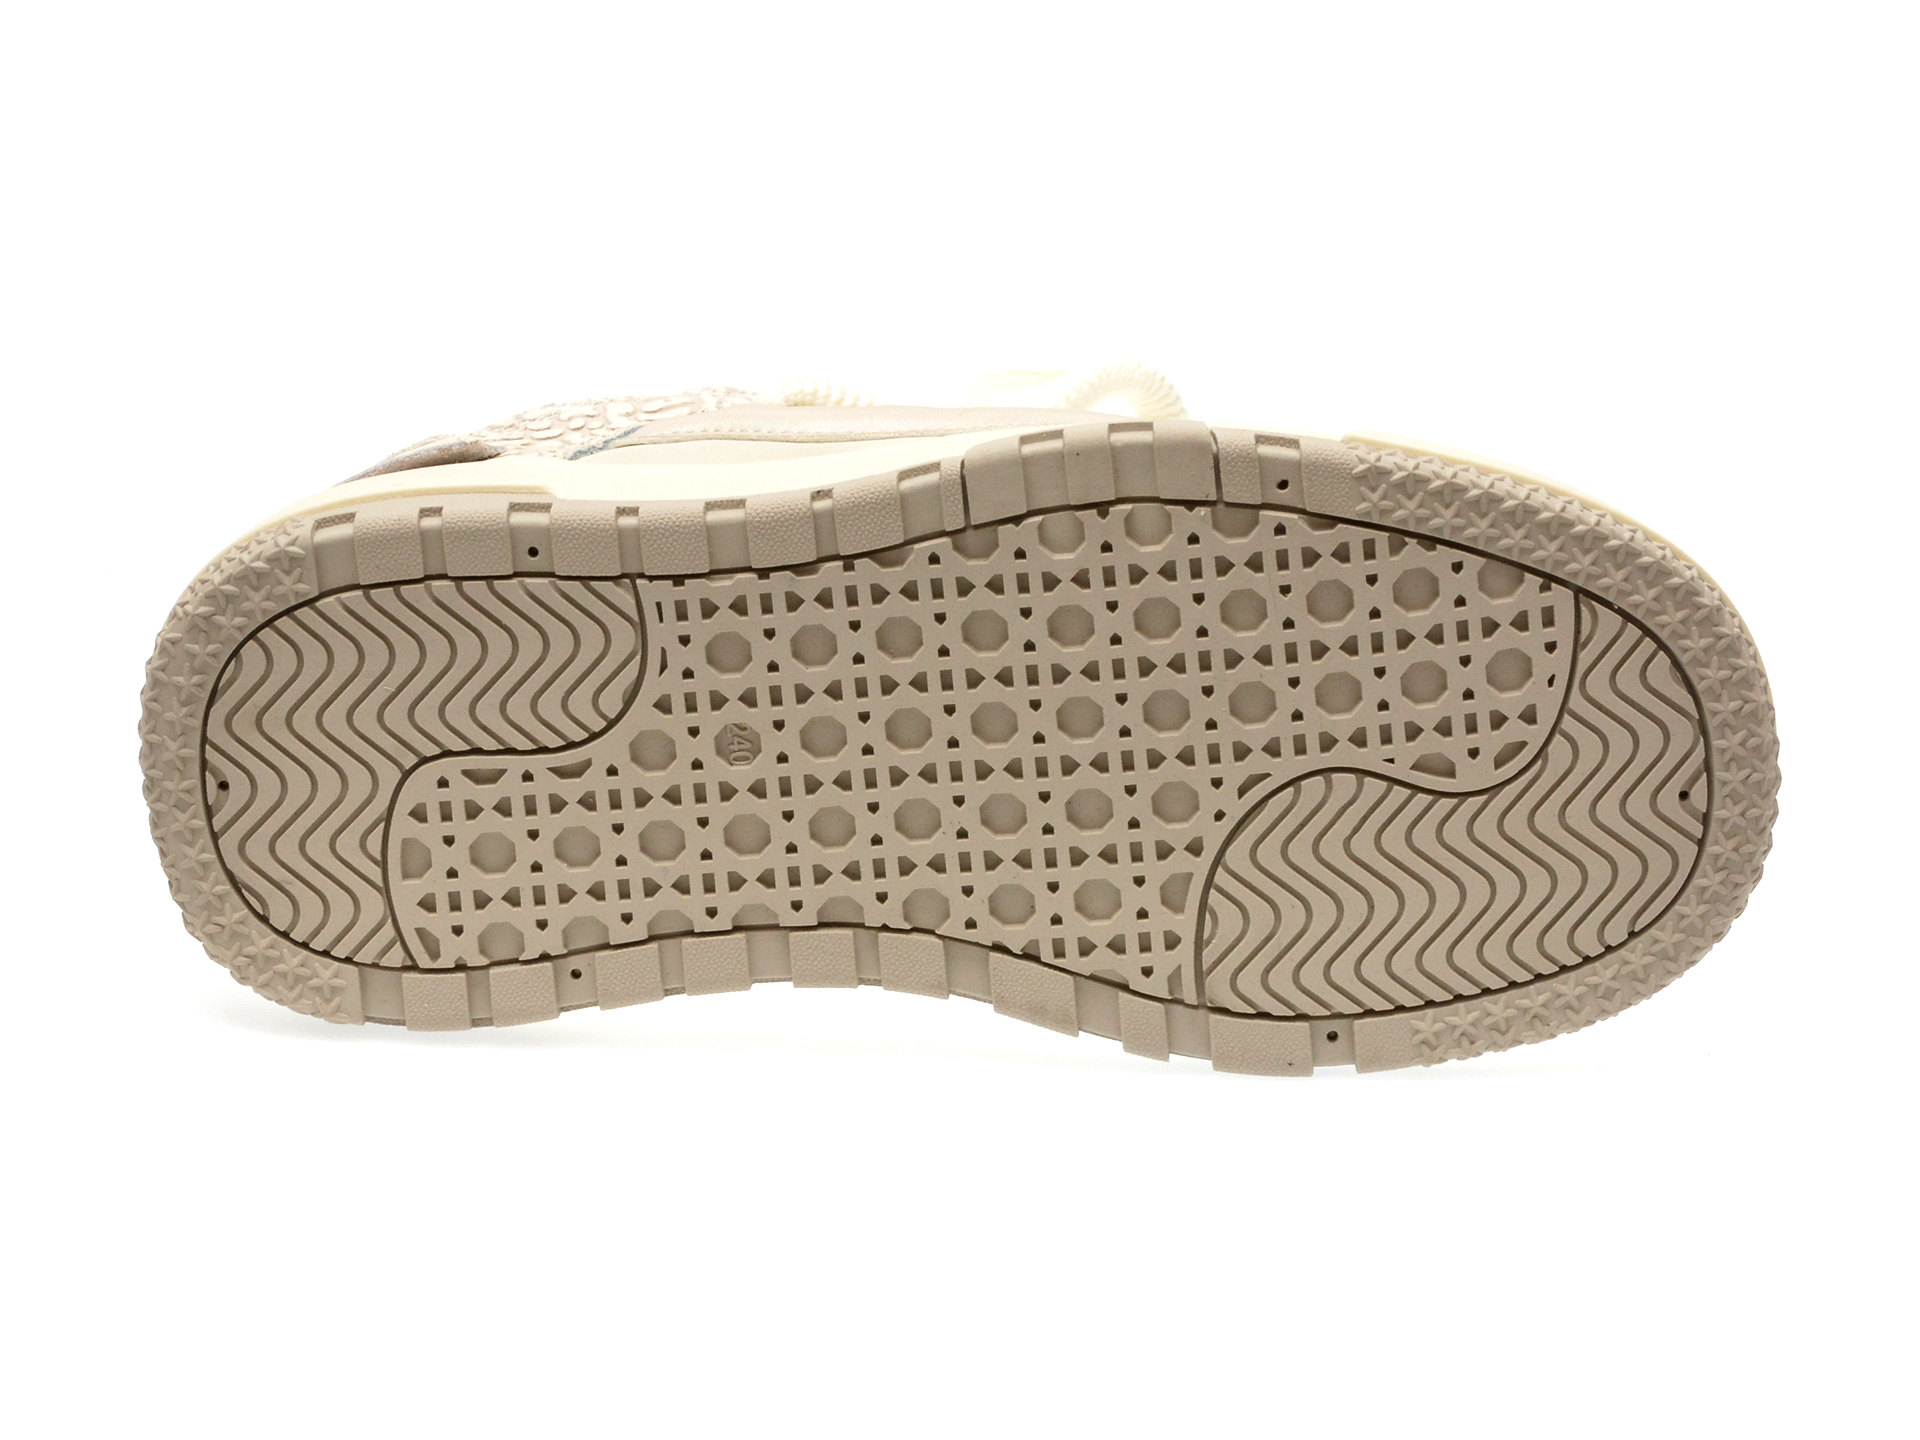 Pantofi sport GRYXX albi, 3551, din piele naturala